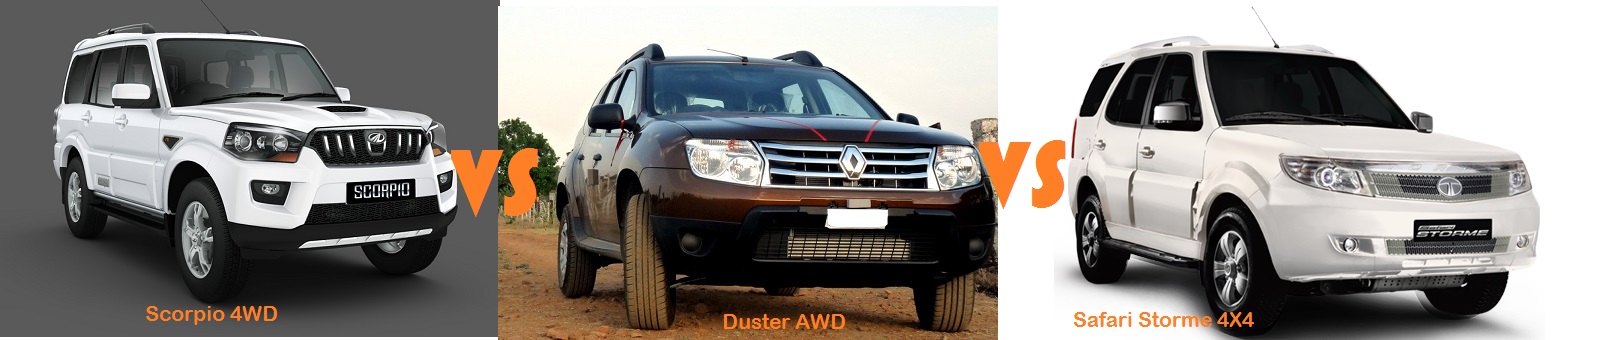 4X4-Scorpio-vs-Duster-AWD-Storme-4WD